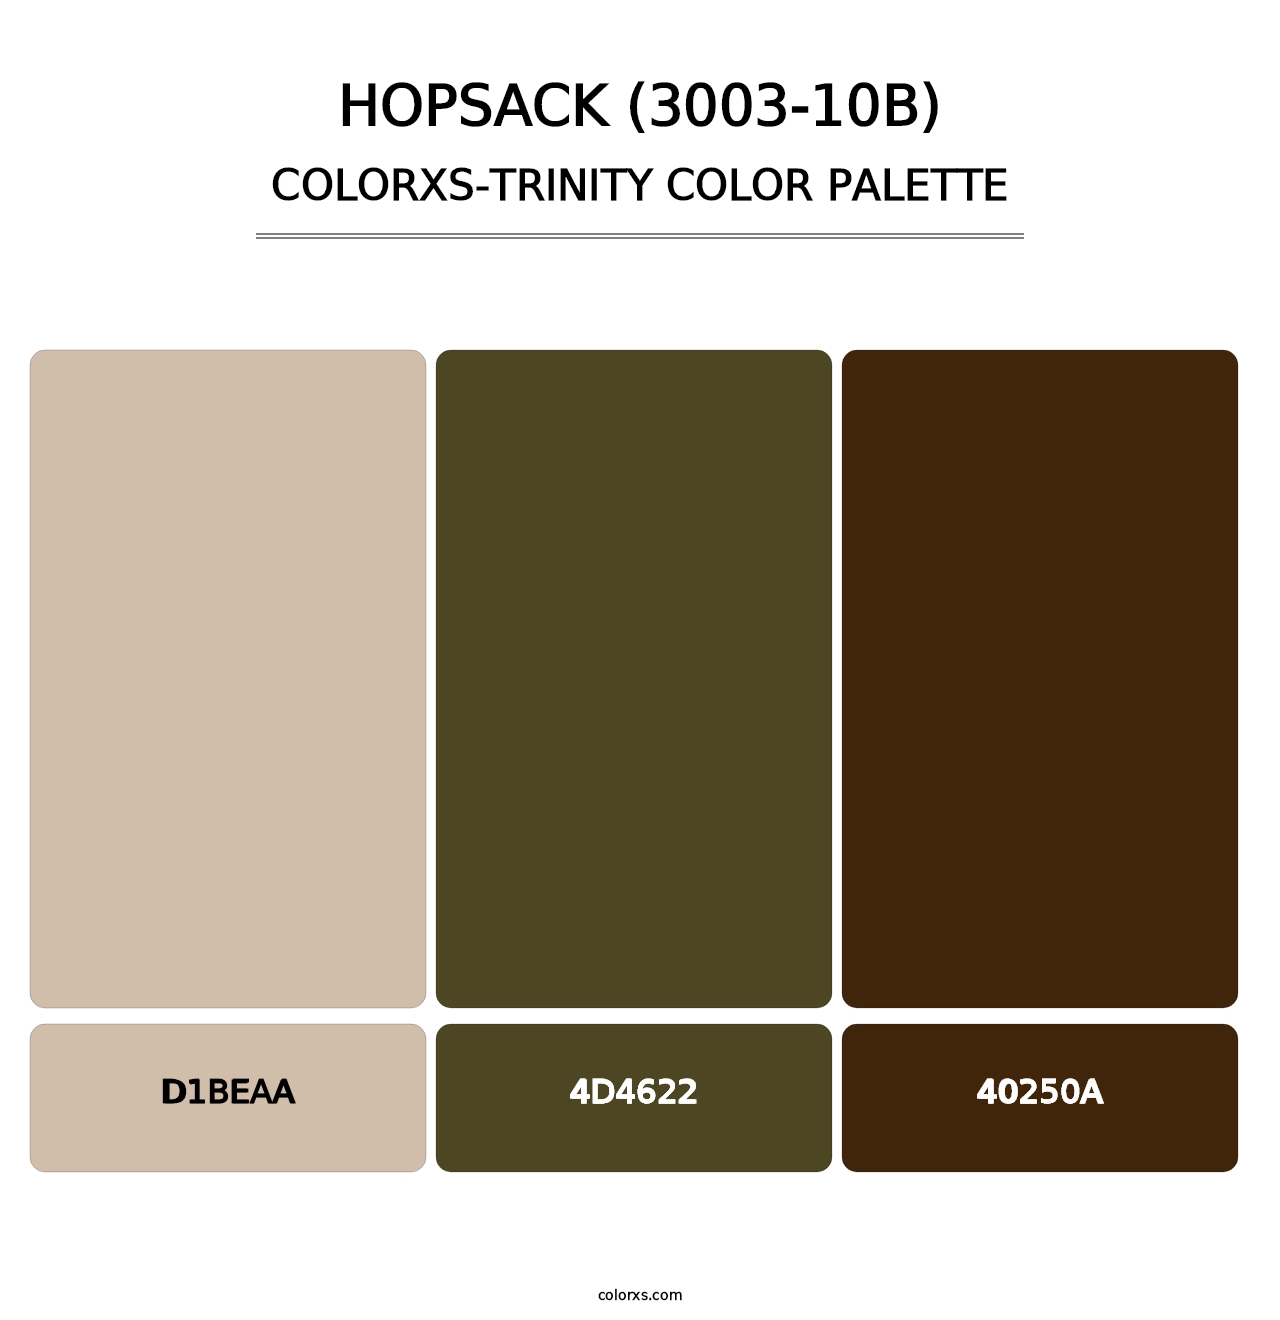 Hopsack (3003-10B) - Colorxs Trinity Palette